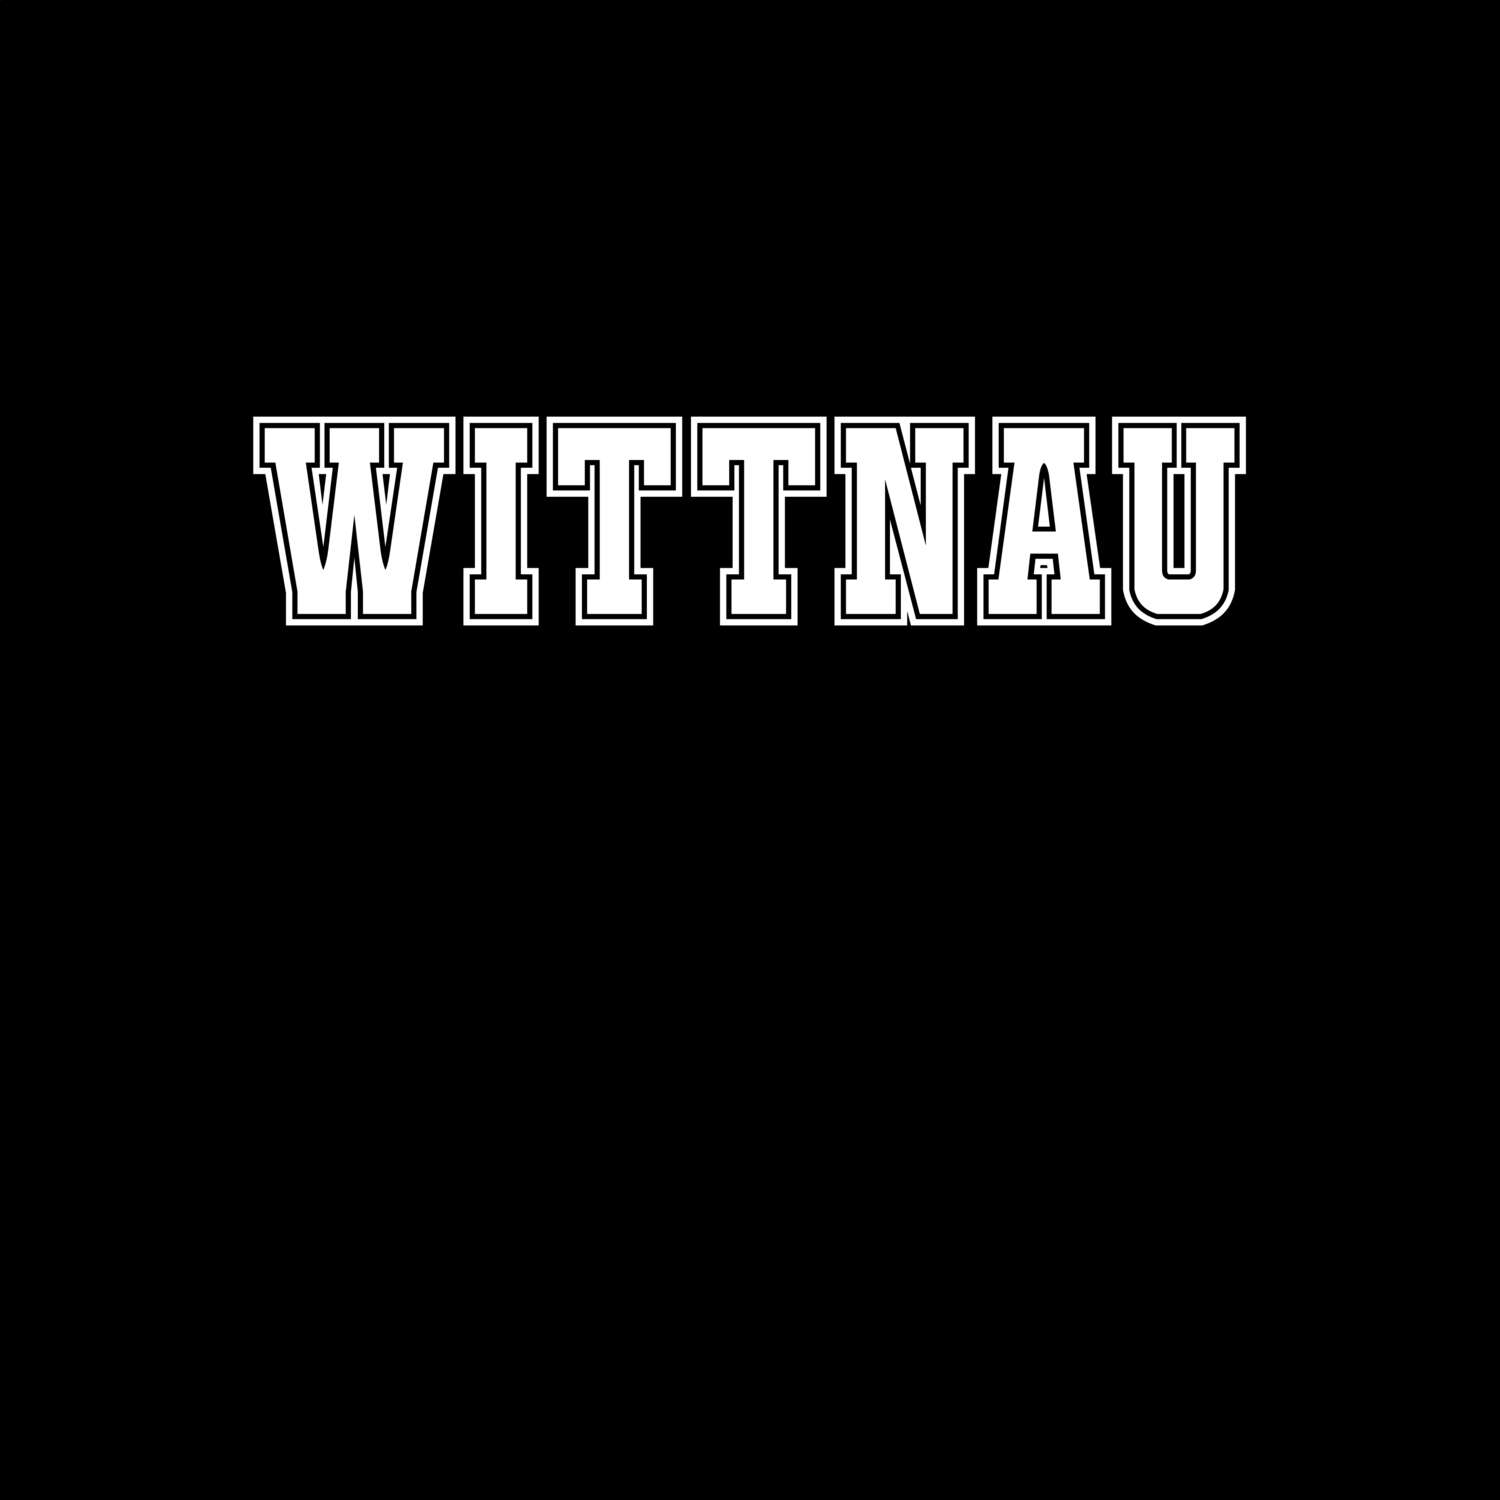 Wittnau T-Shirt »Classic«